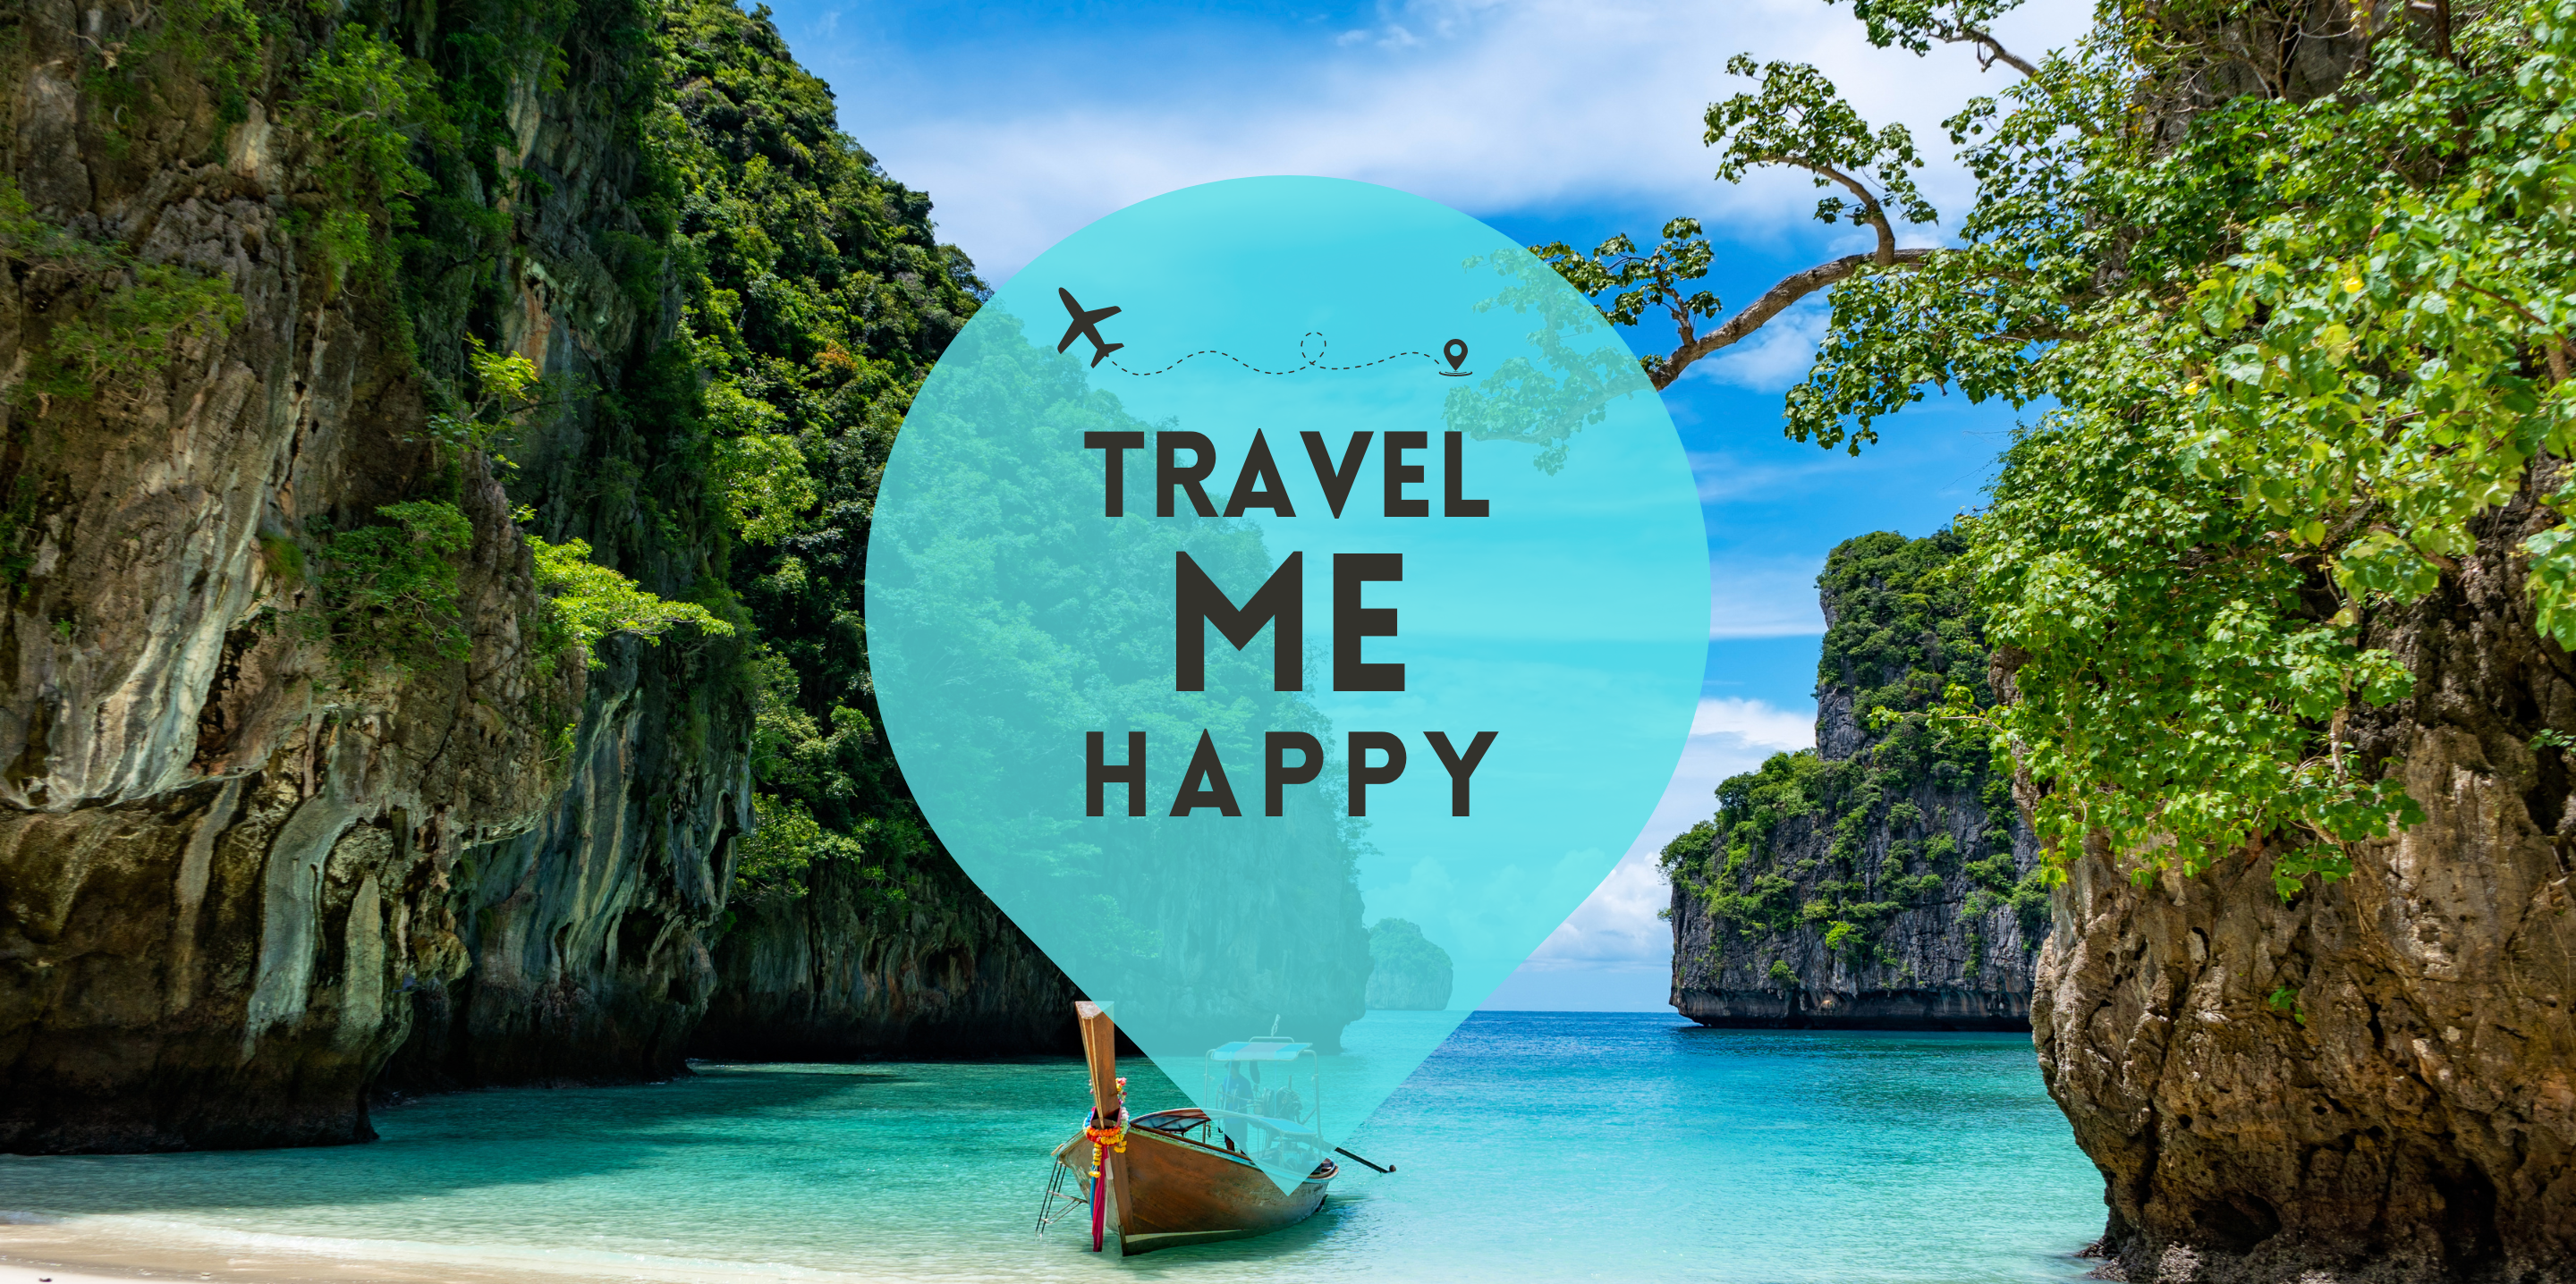 Travel Me Happy – Blog voyage